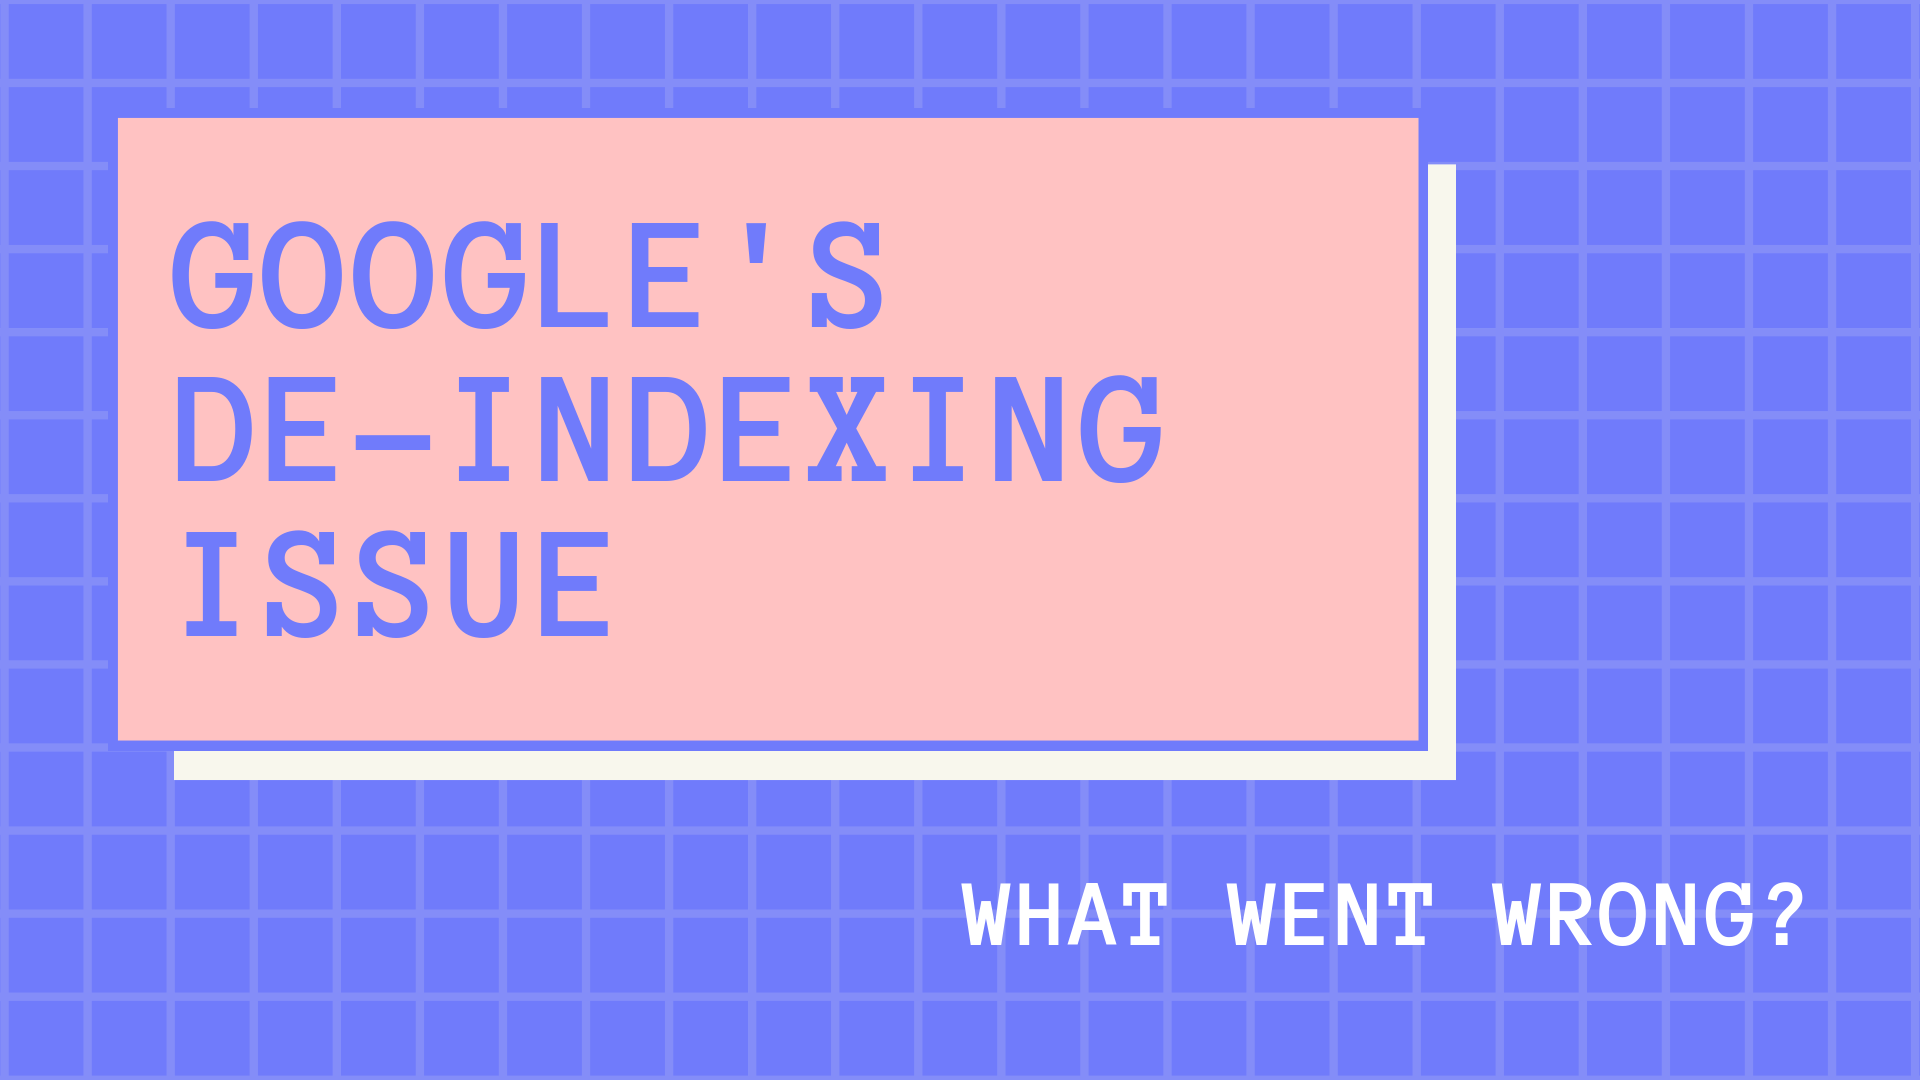 Google's Deindexing Issue